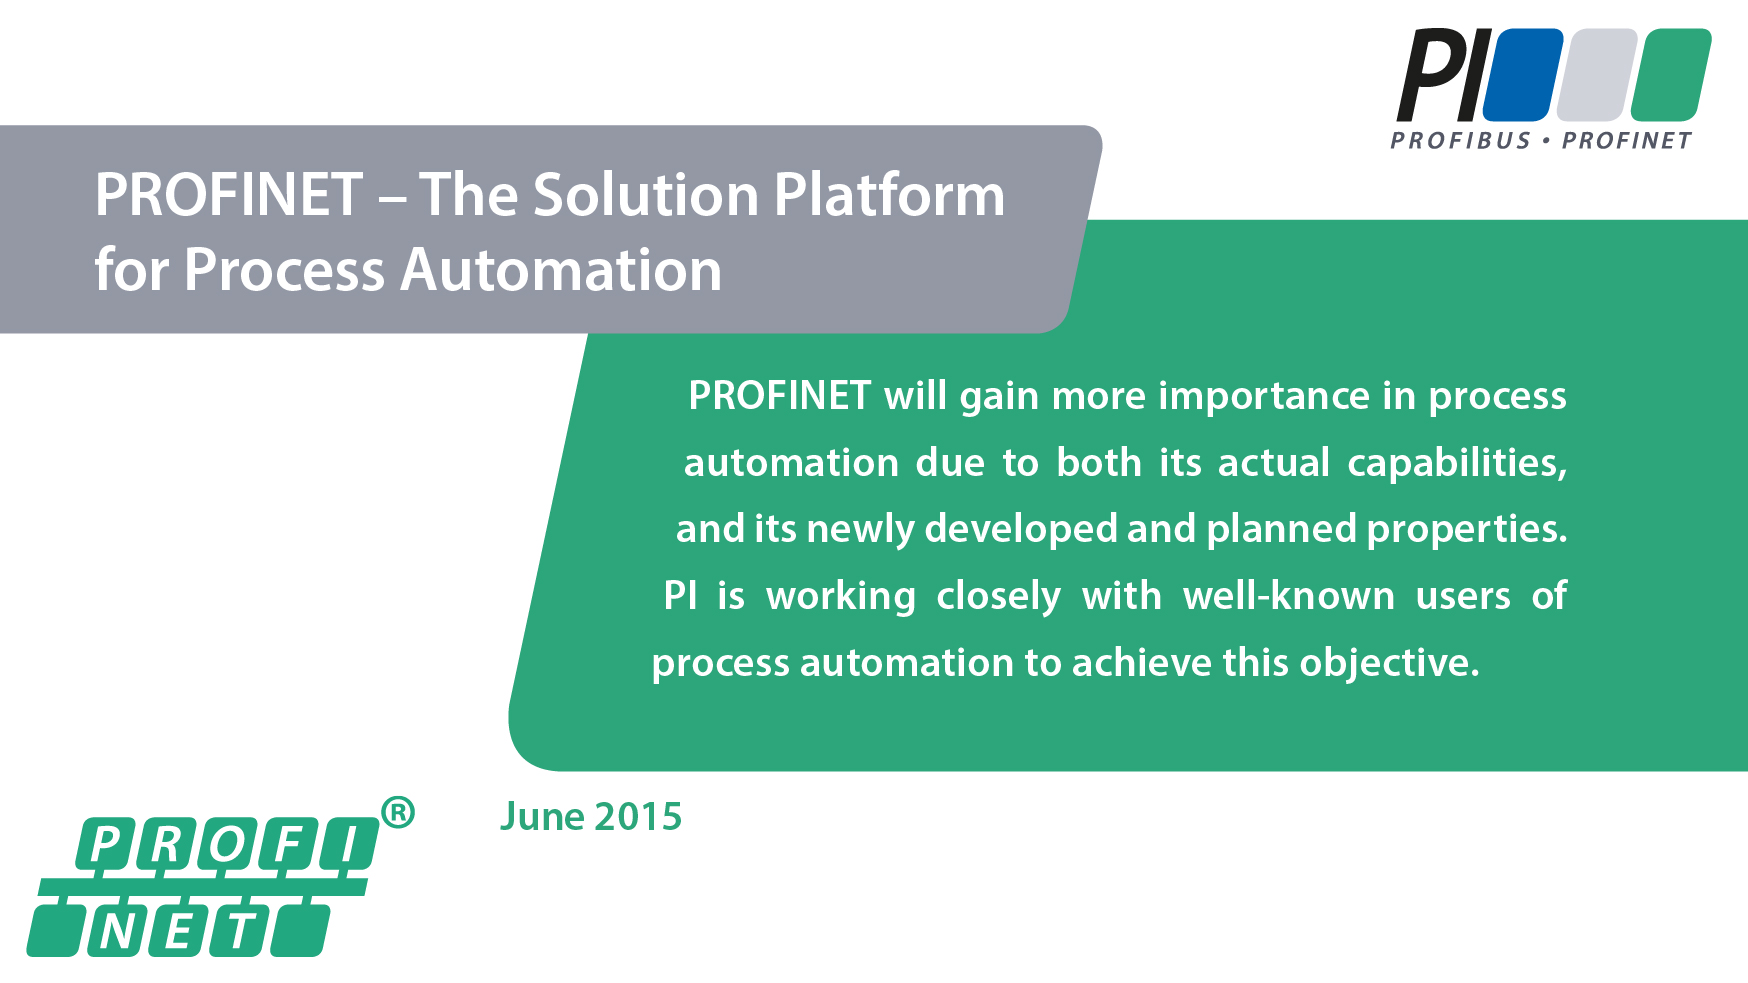 PROFINET – The Solution Platform for Process Automation